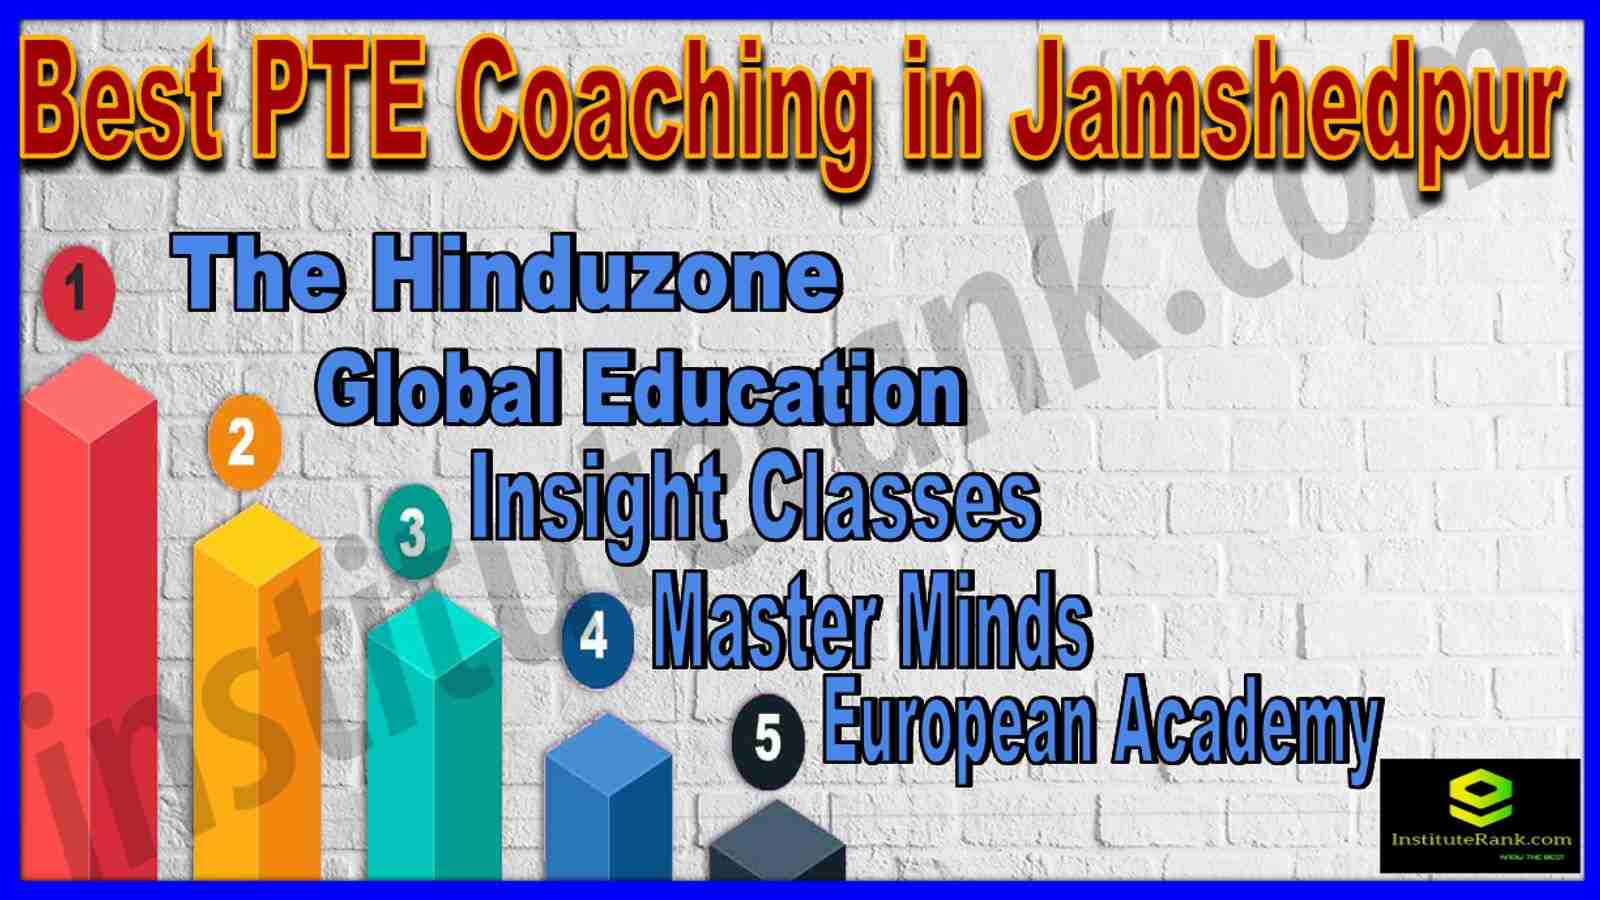 Best PTE Coaching in Jamshedpur